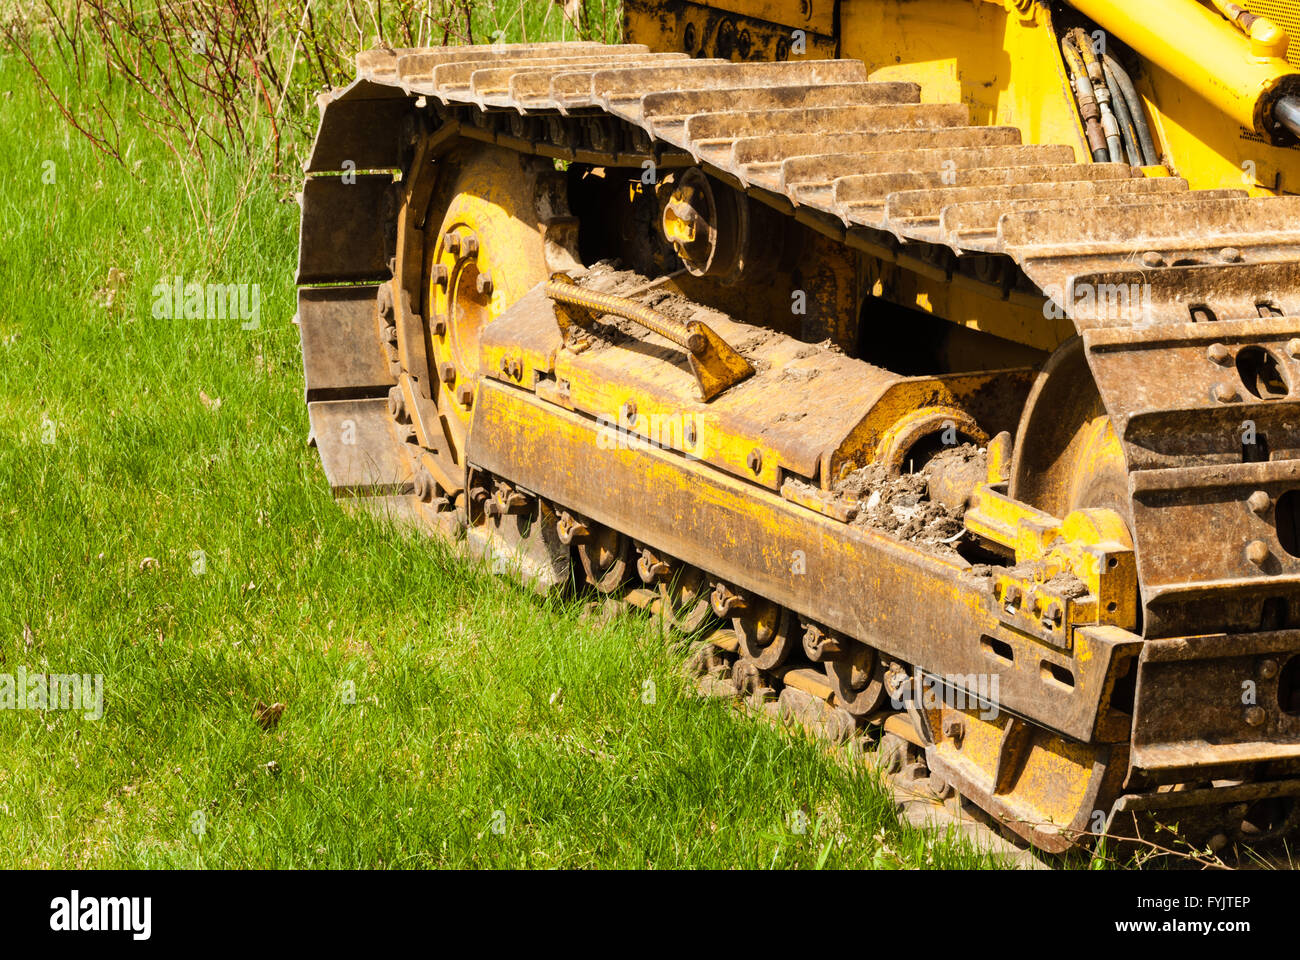 Muddy caterpillar tracks and treads on bulldozer parked on green grass. Stock Photo